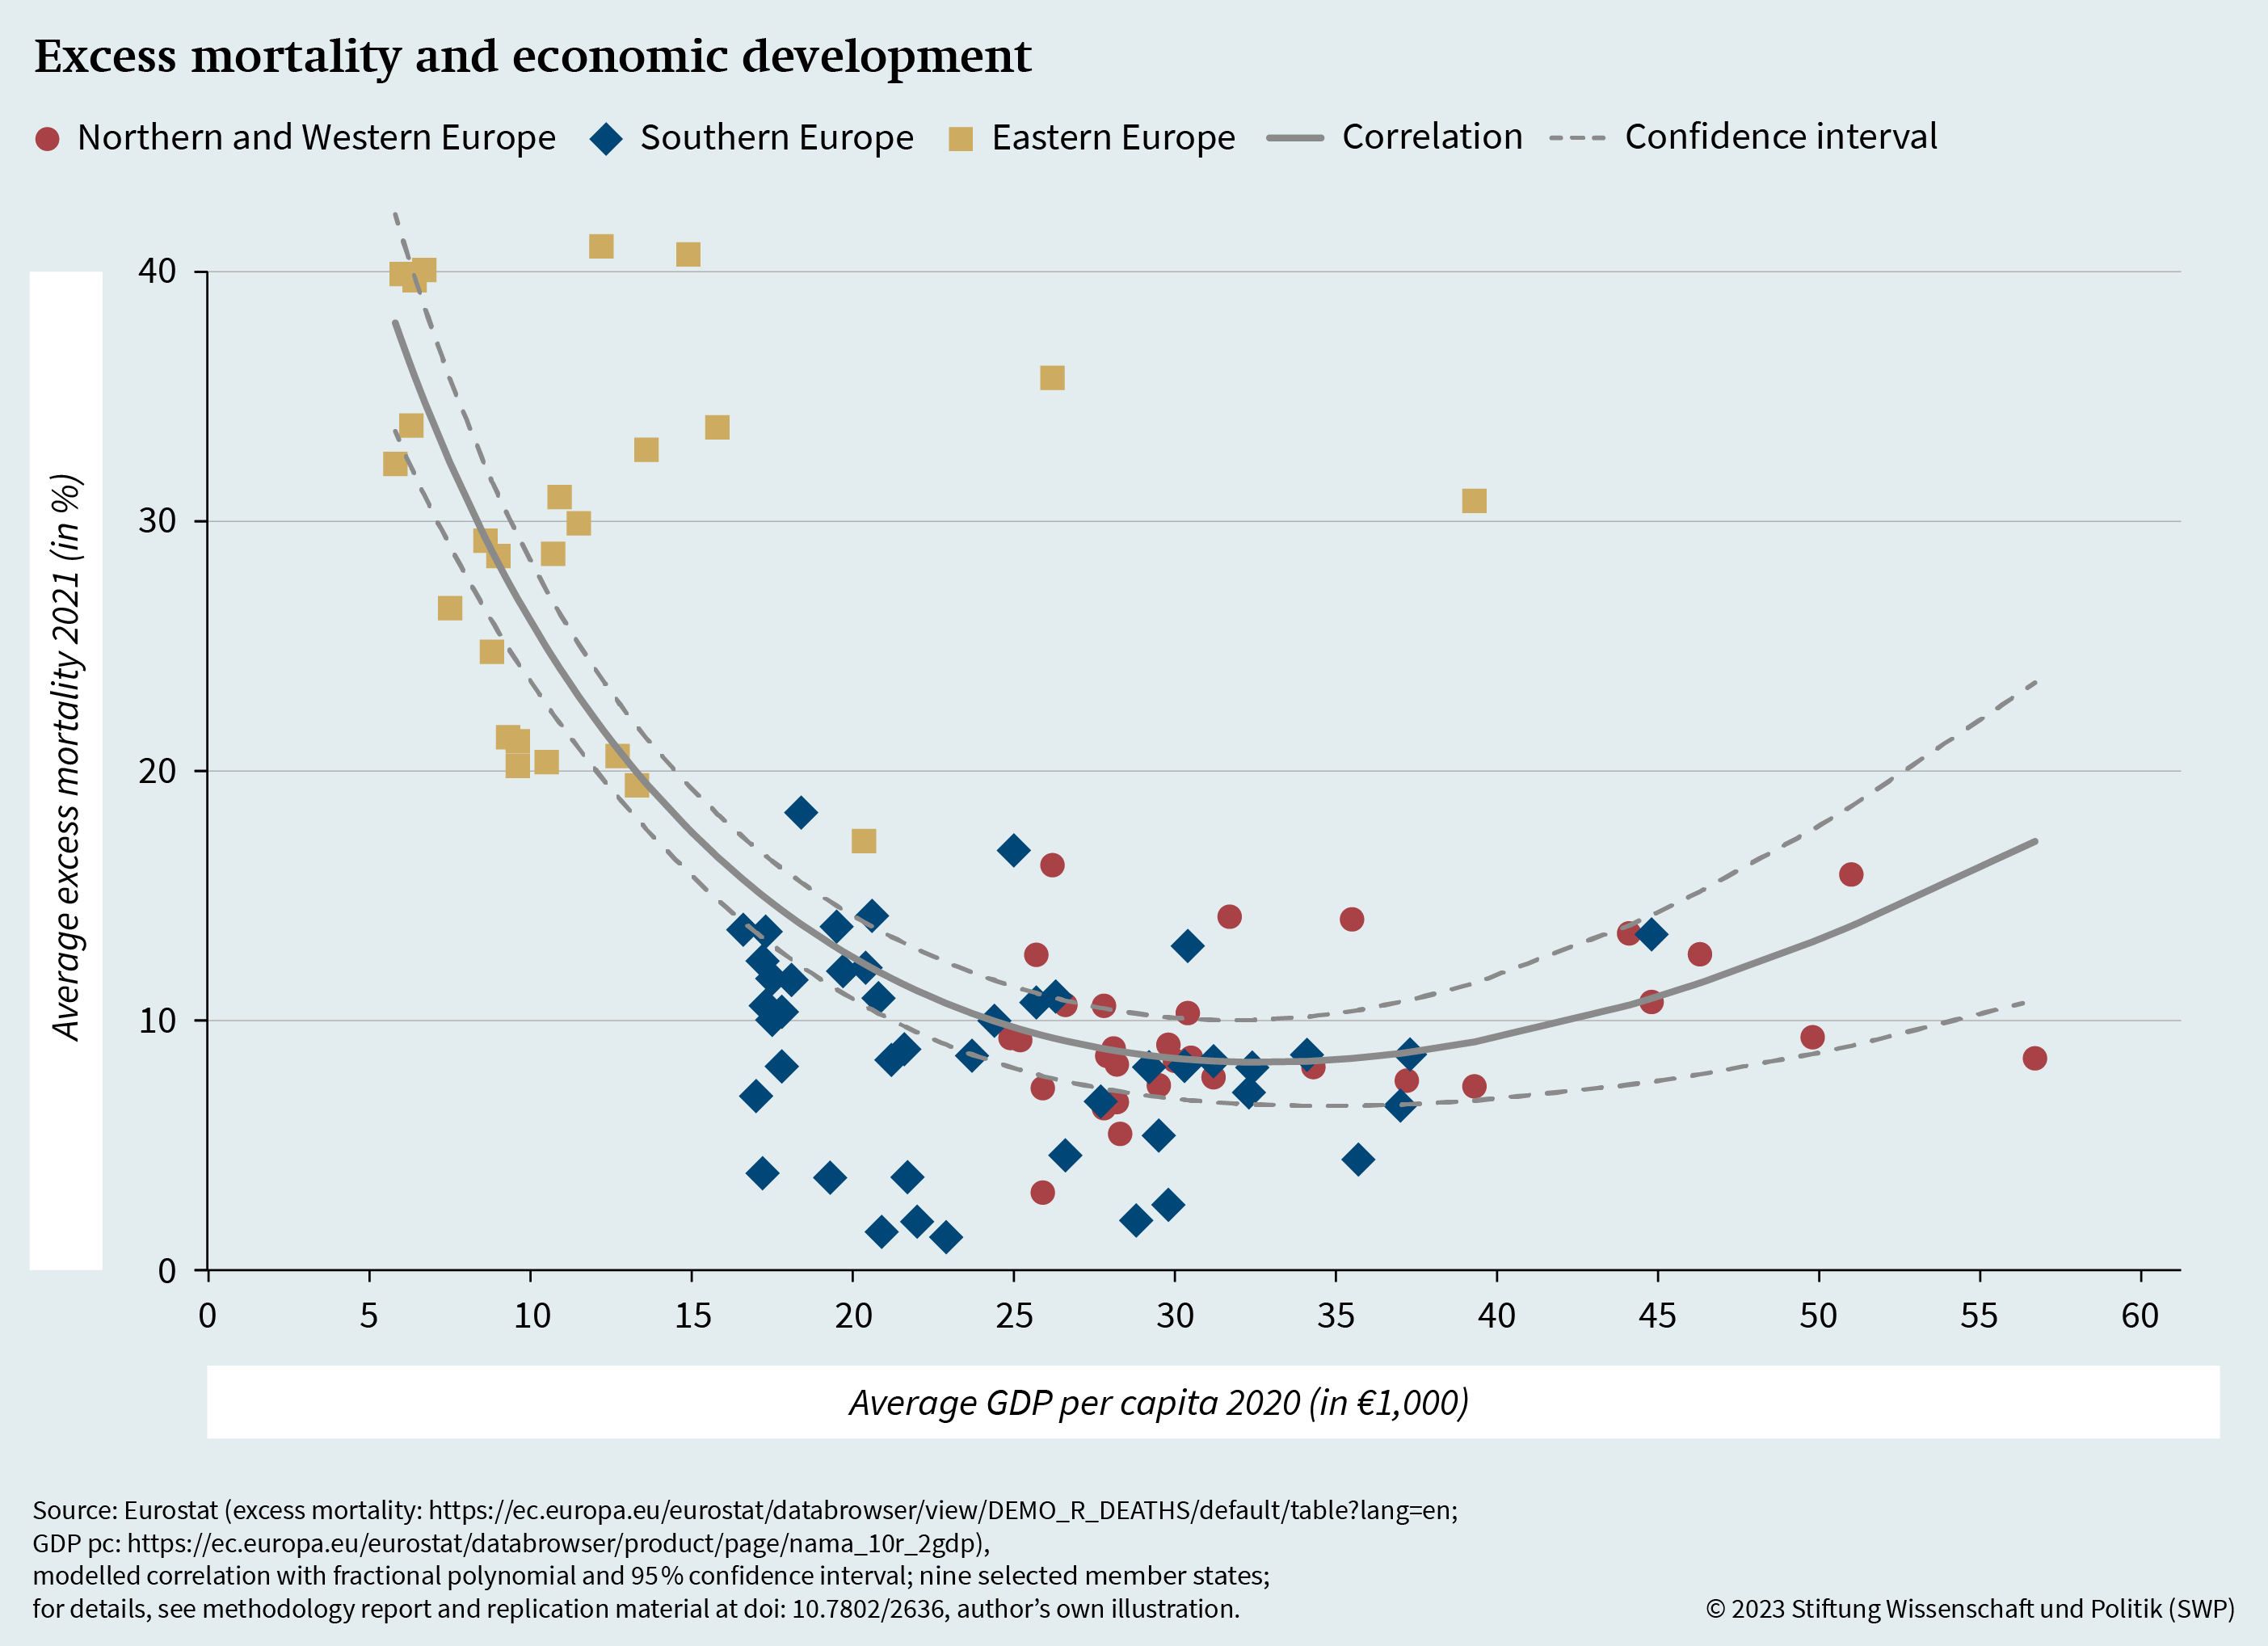 Figure A.3: Excess mortality and economic development